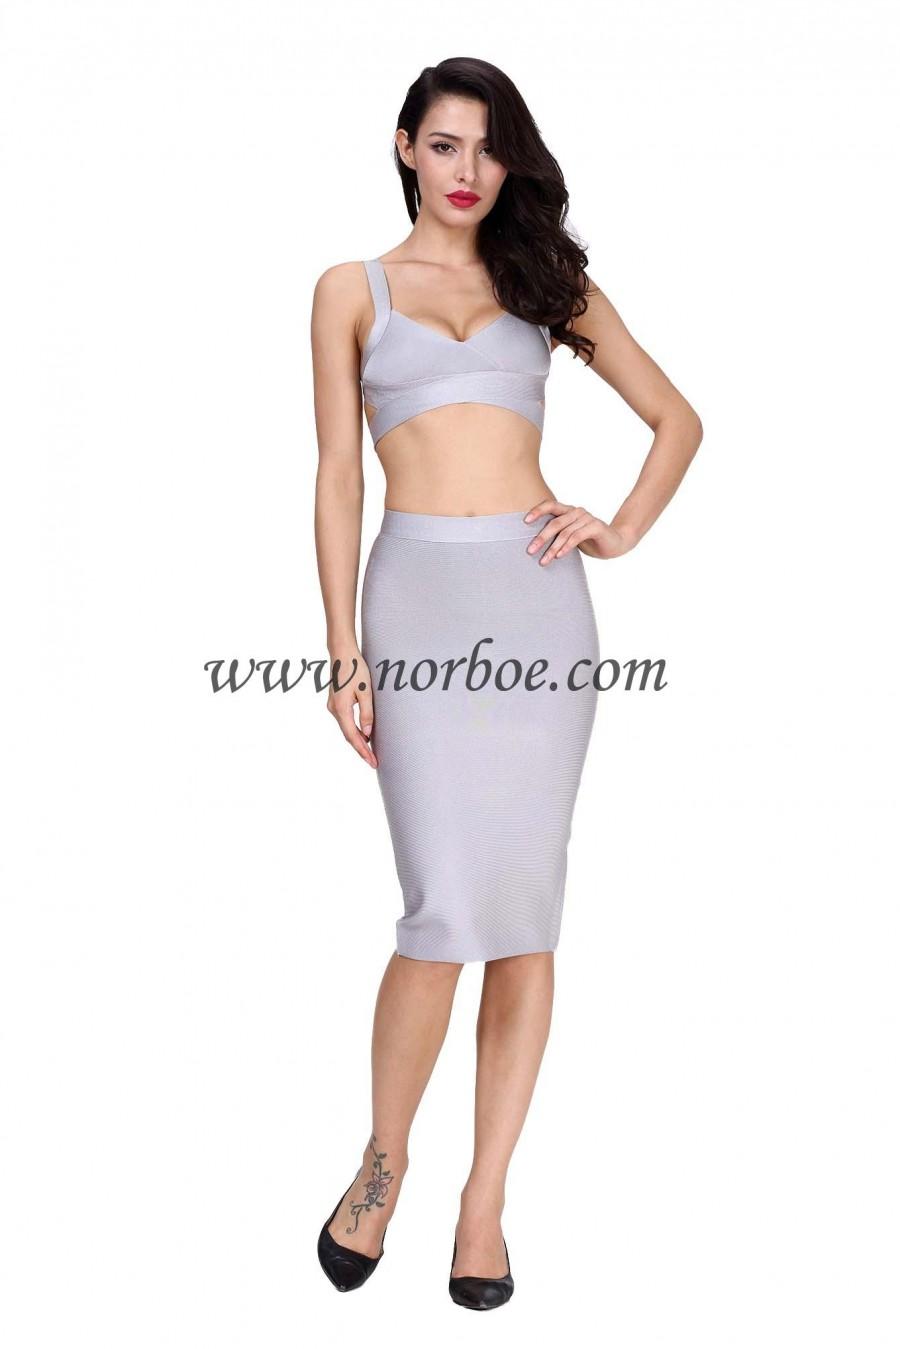 Wedding - Norboe Premium Quality Bandage Dress-Gray